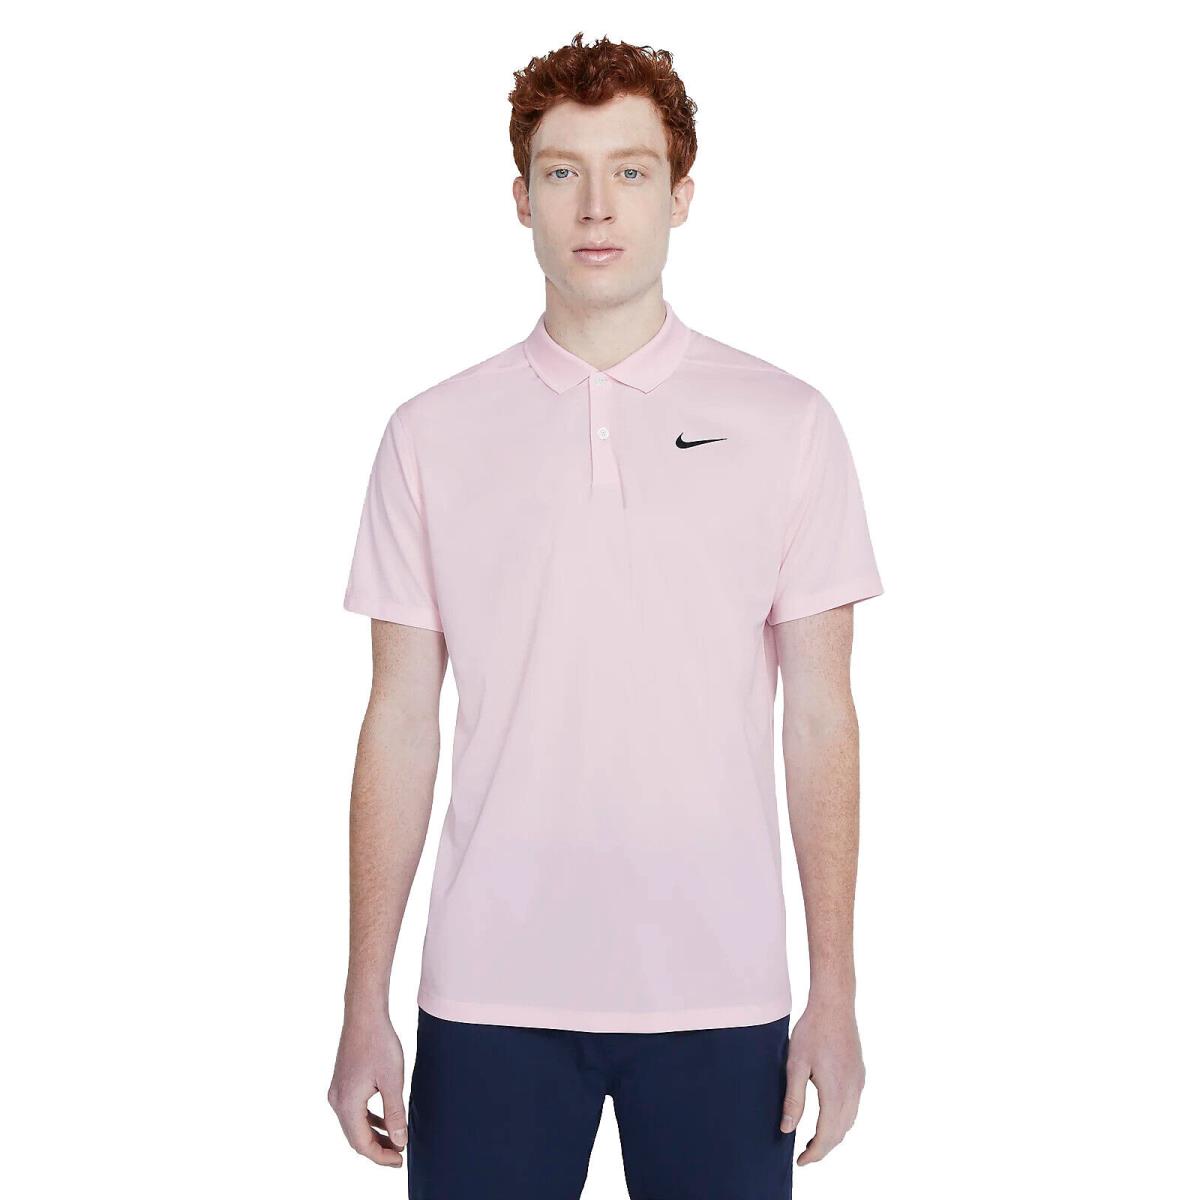 Nike Dri-fit Victory Polo Shirt sz L Large Pink Standard Fit Golf